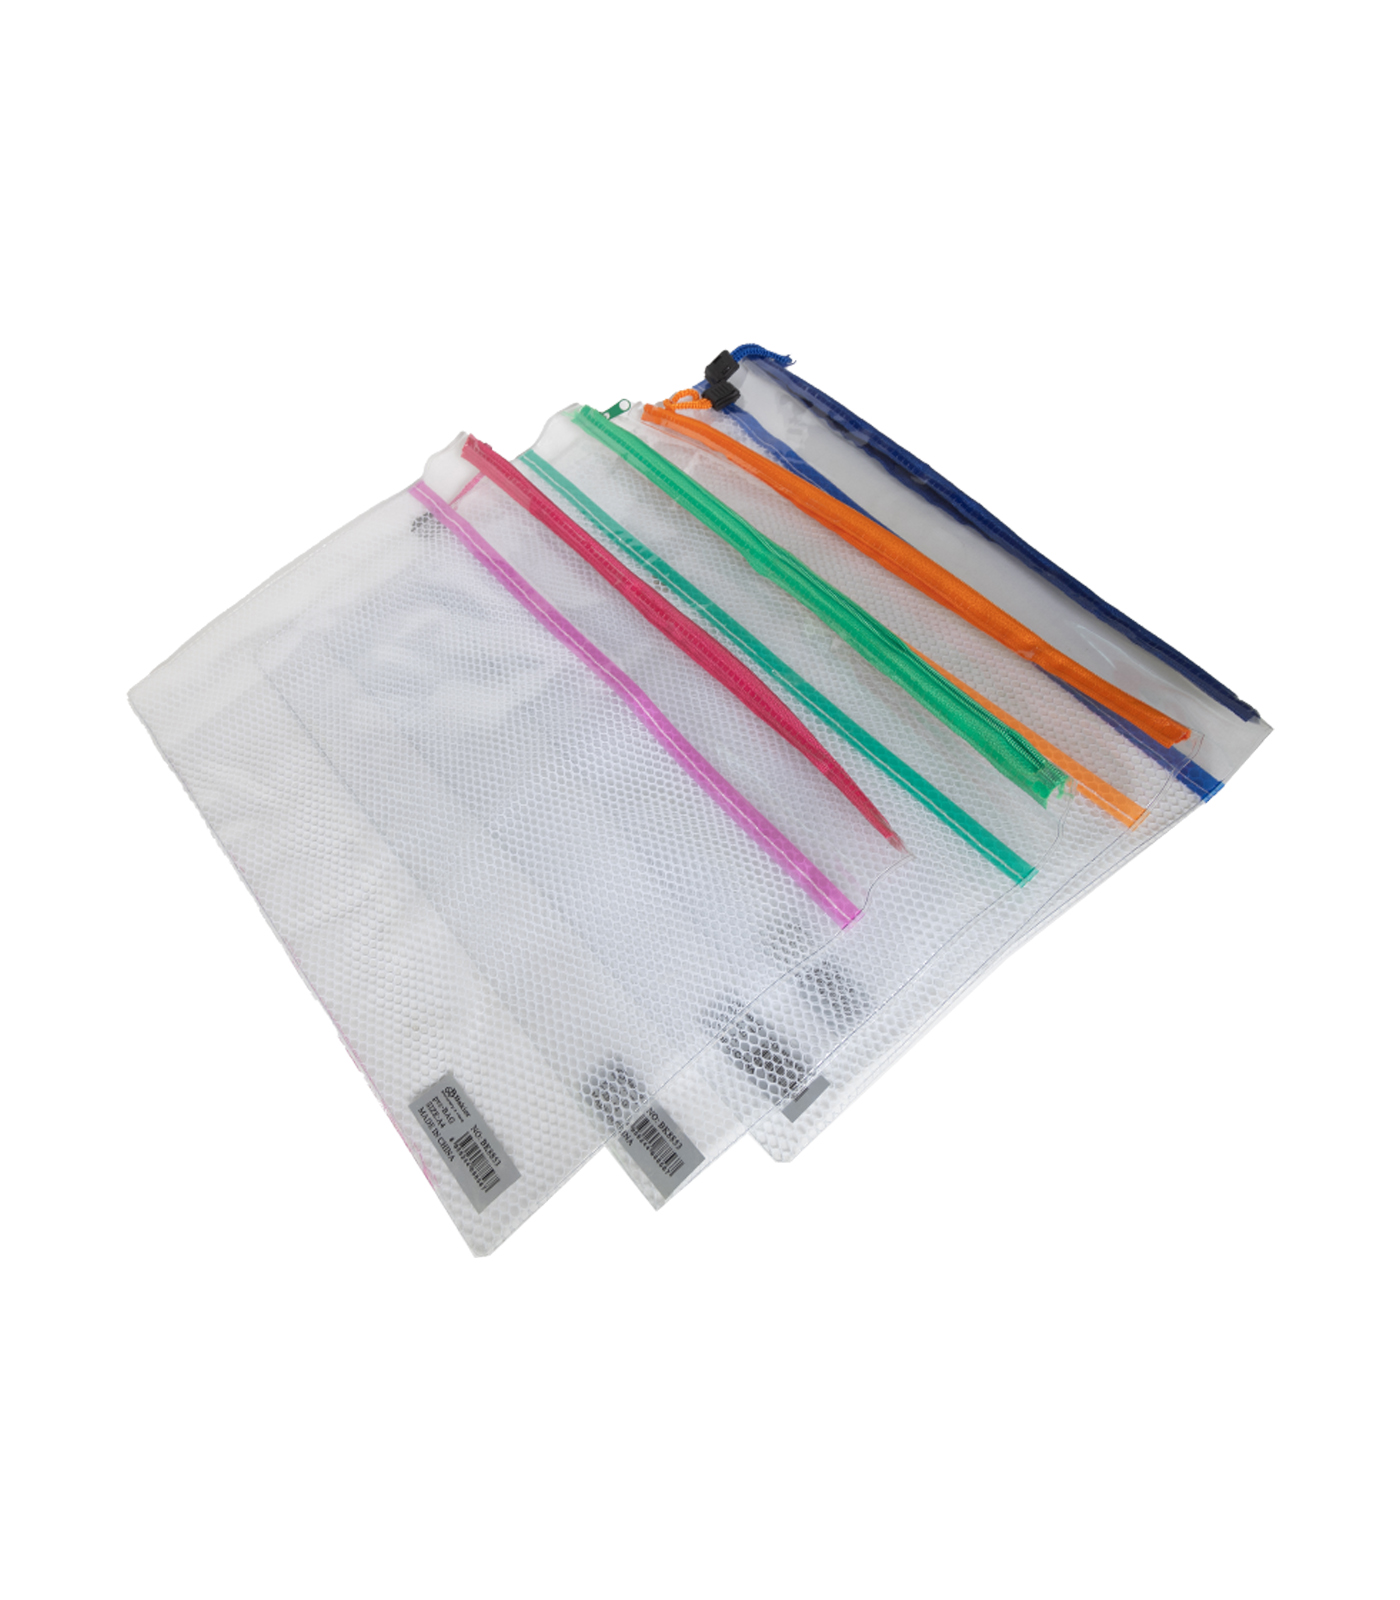 Folder with colorful zipper - Transparent - A4